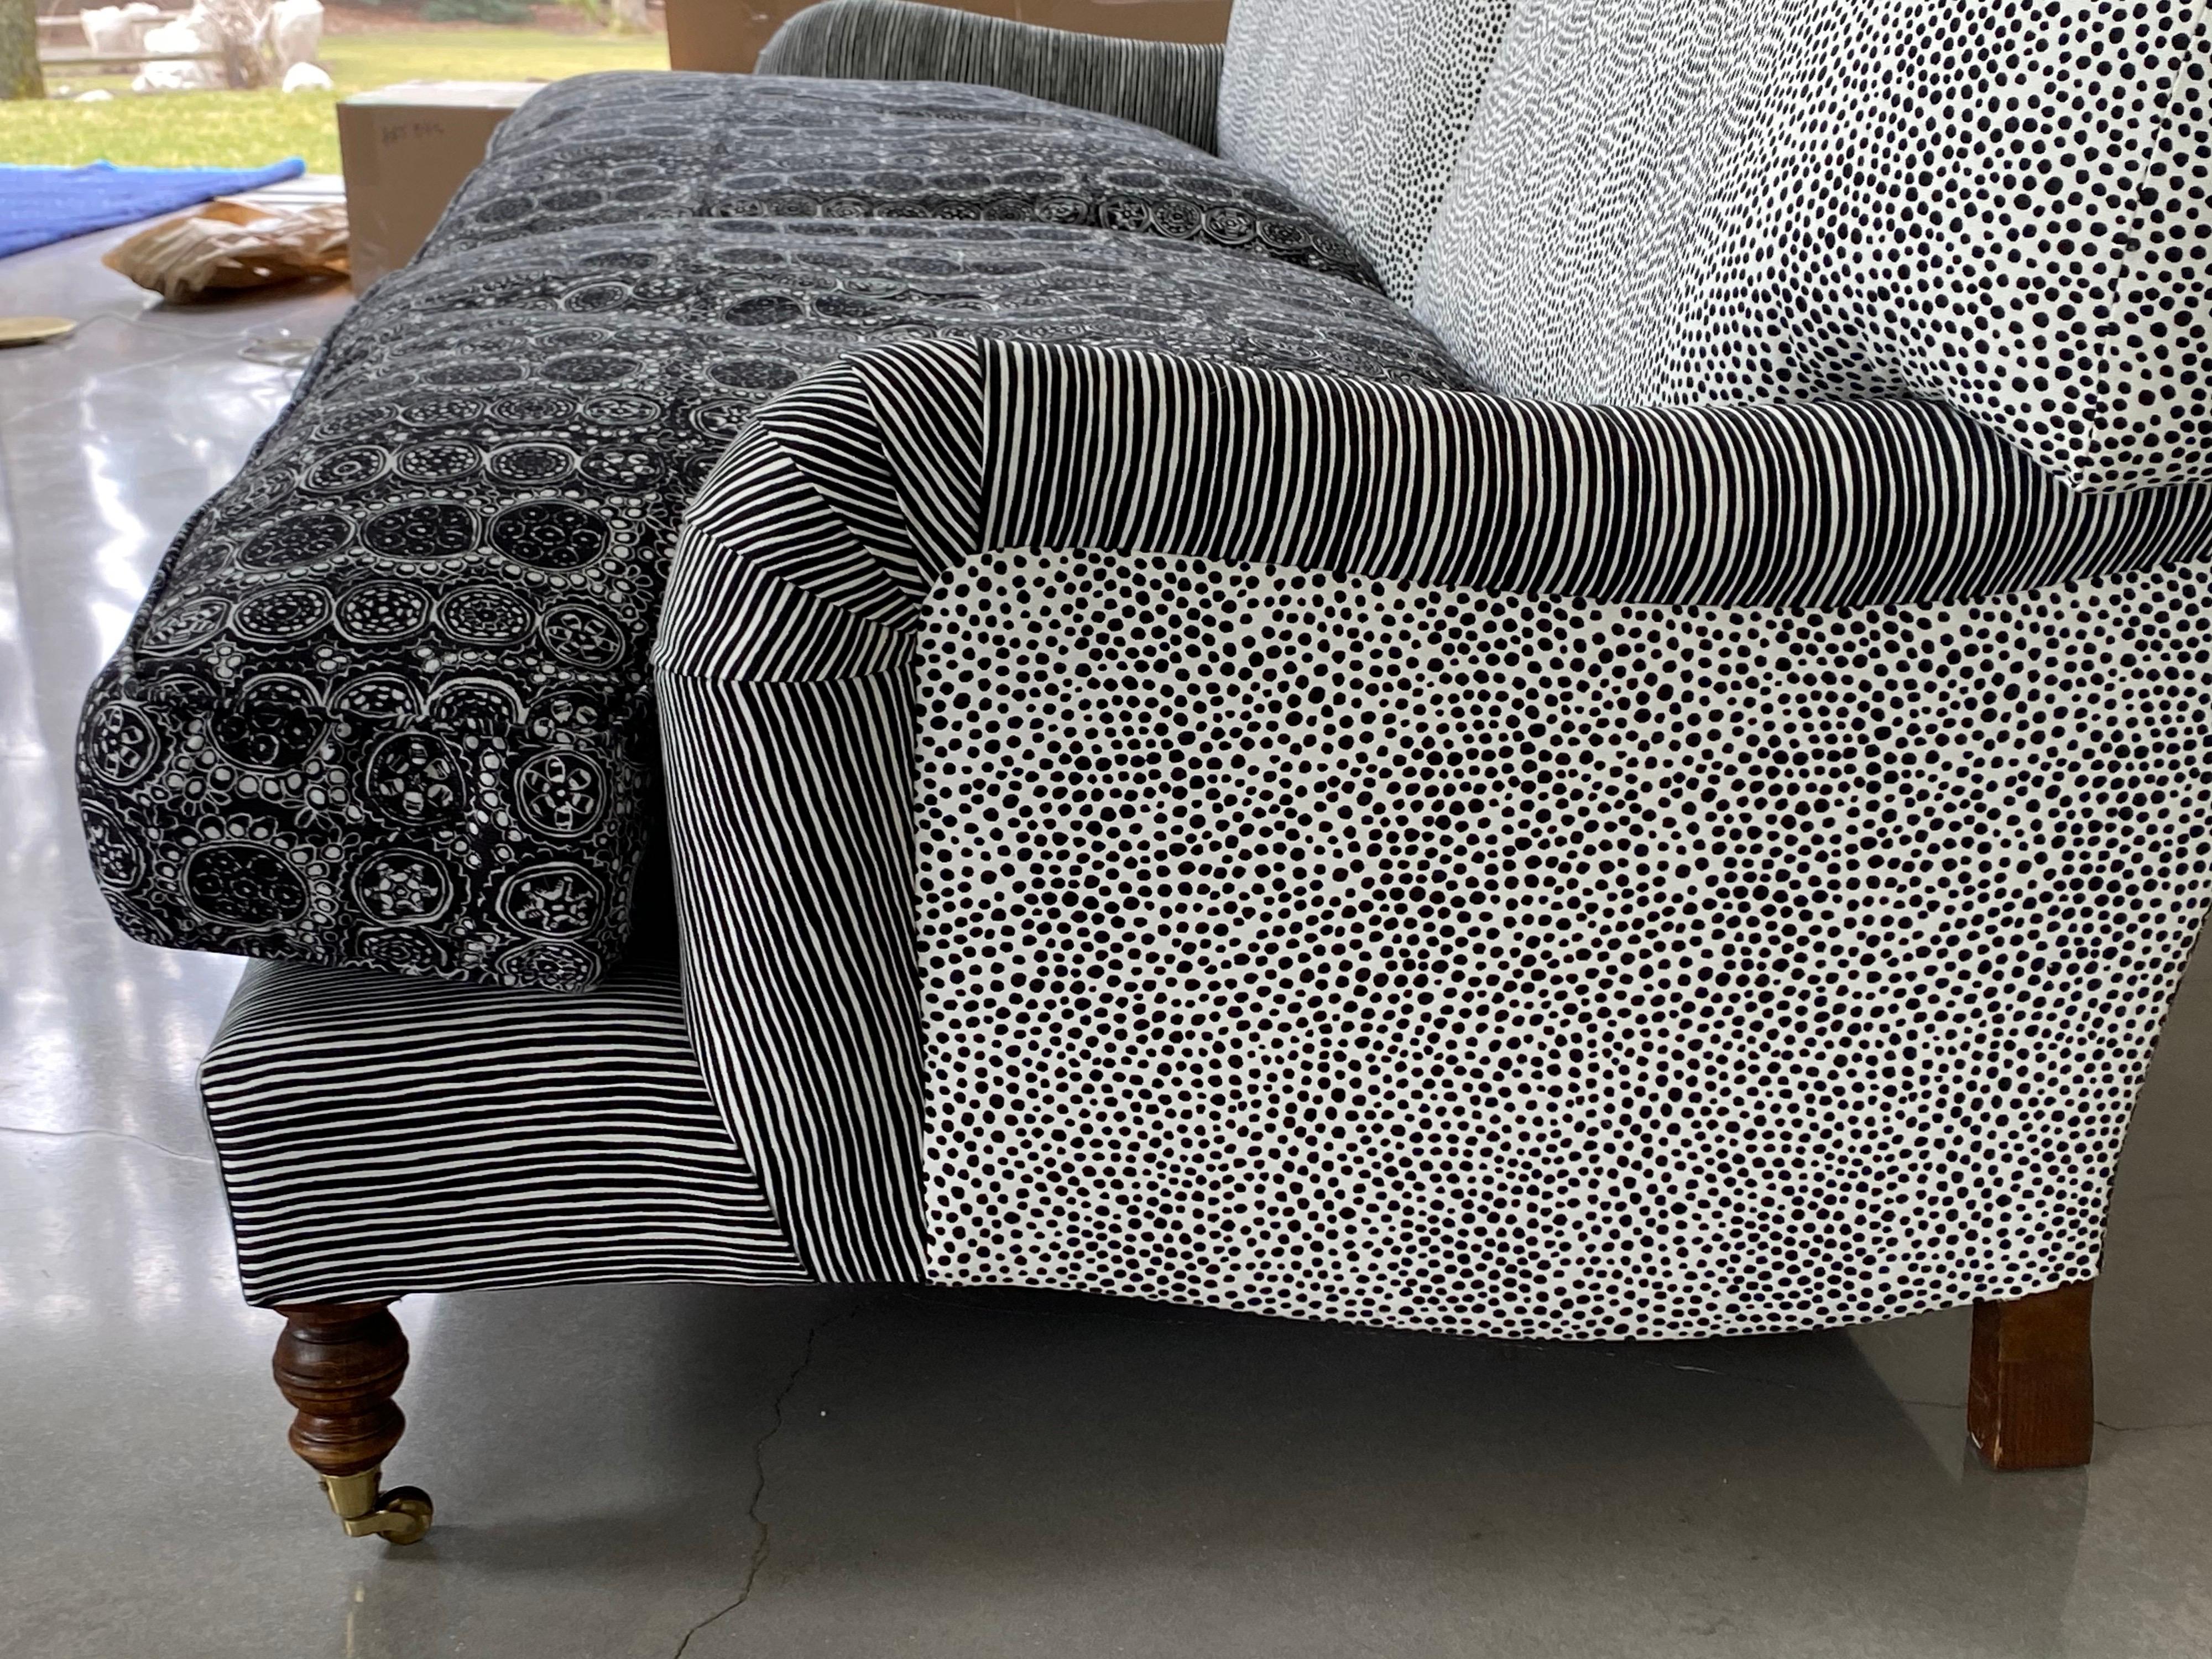 20th Century George Sherlock Extended Two Seater Sofa covered in Marimekko Fabrics